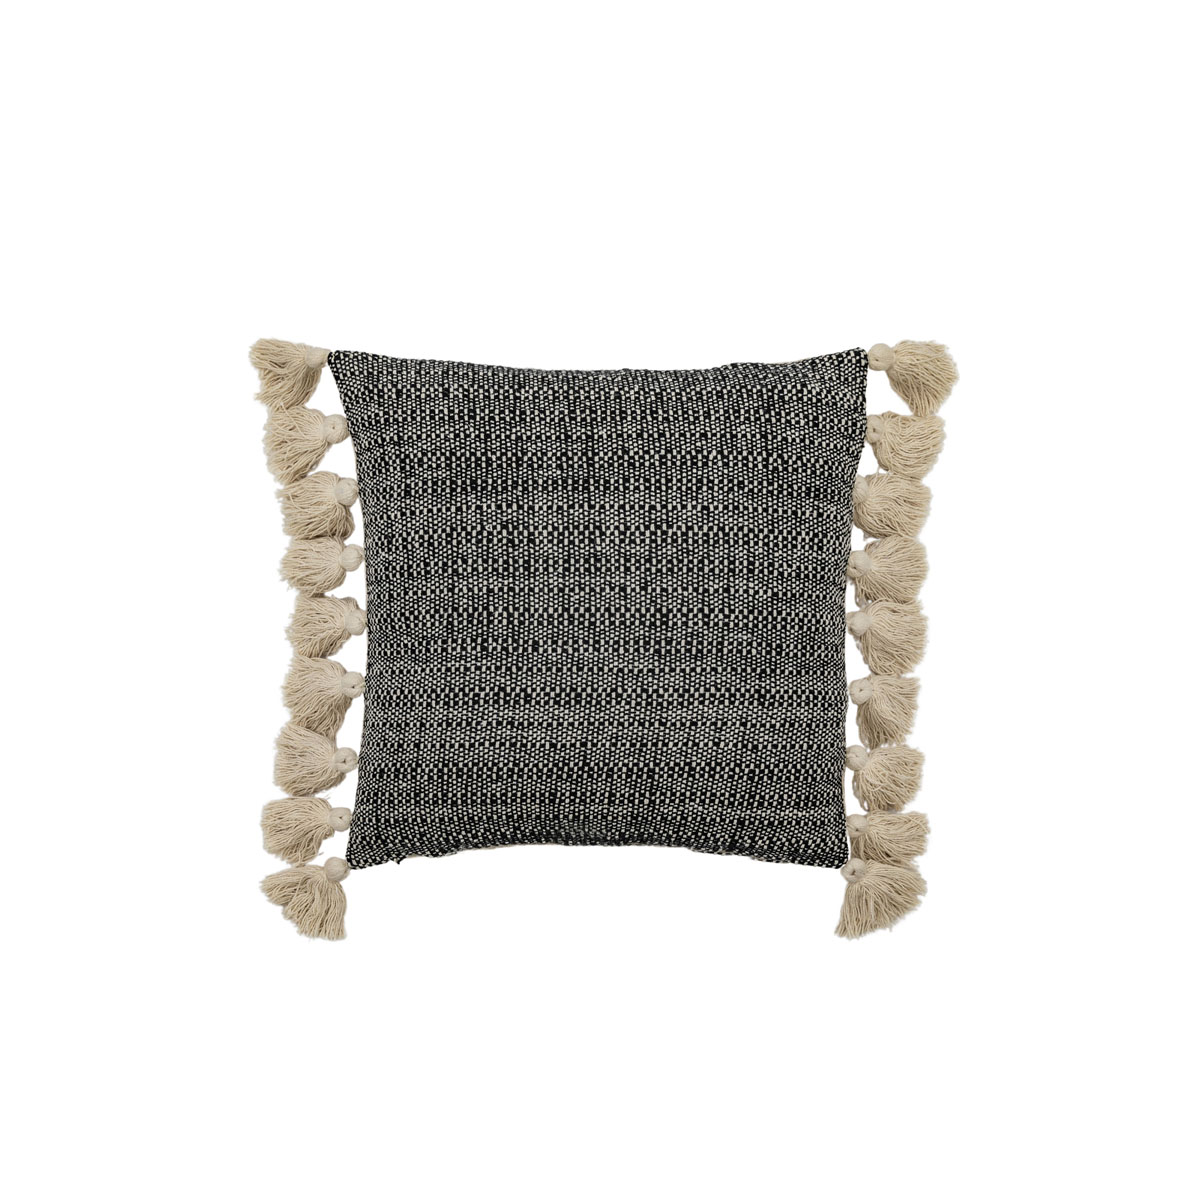 Woven Cushion with Tassels Black 450x450mm